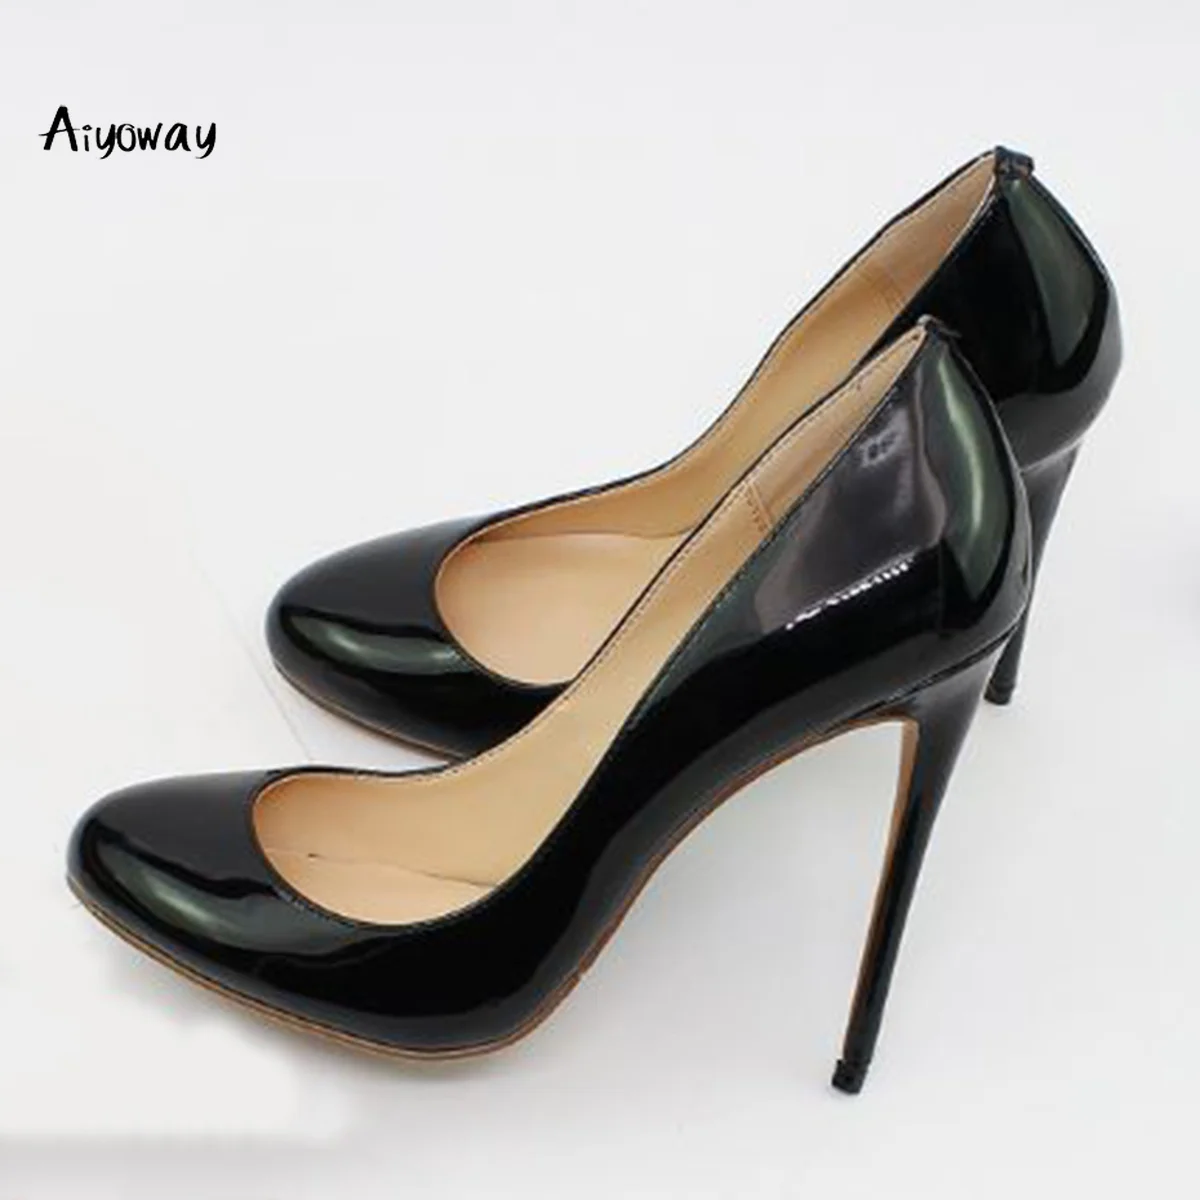 Aiyoway Women Shoes Round Toe High Heels Pumps Autumn Spring Work ...